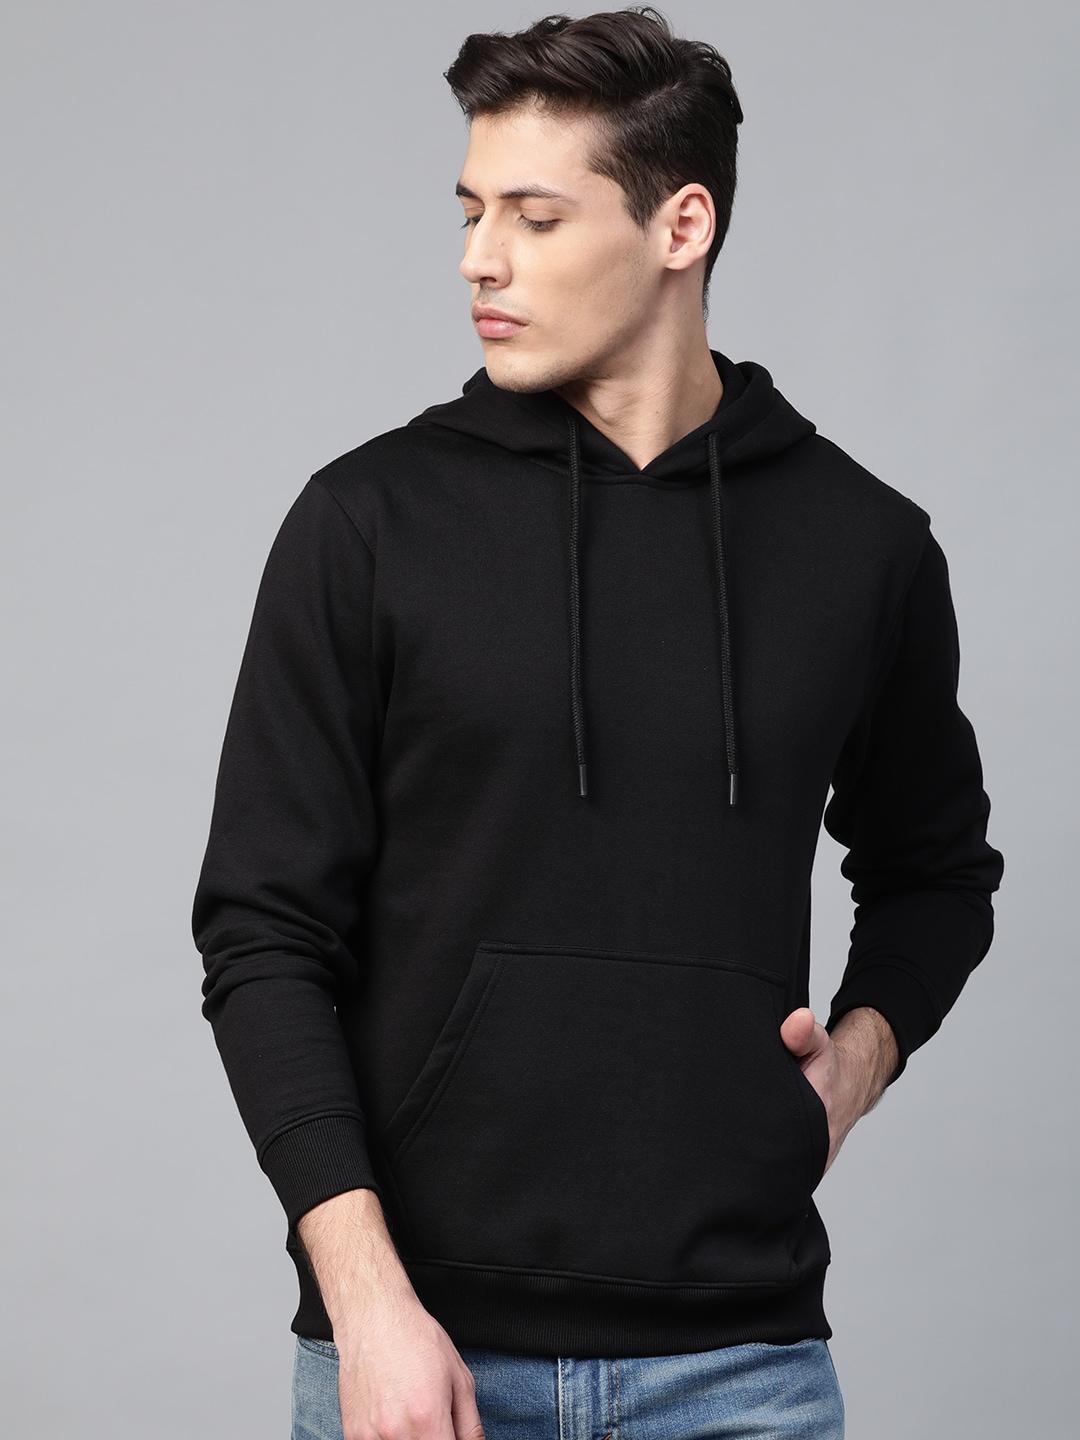 roadster-men-black-solid-hooded-sweatshirt